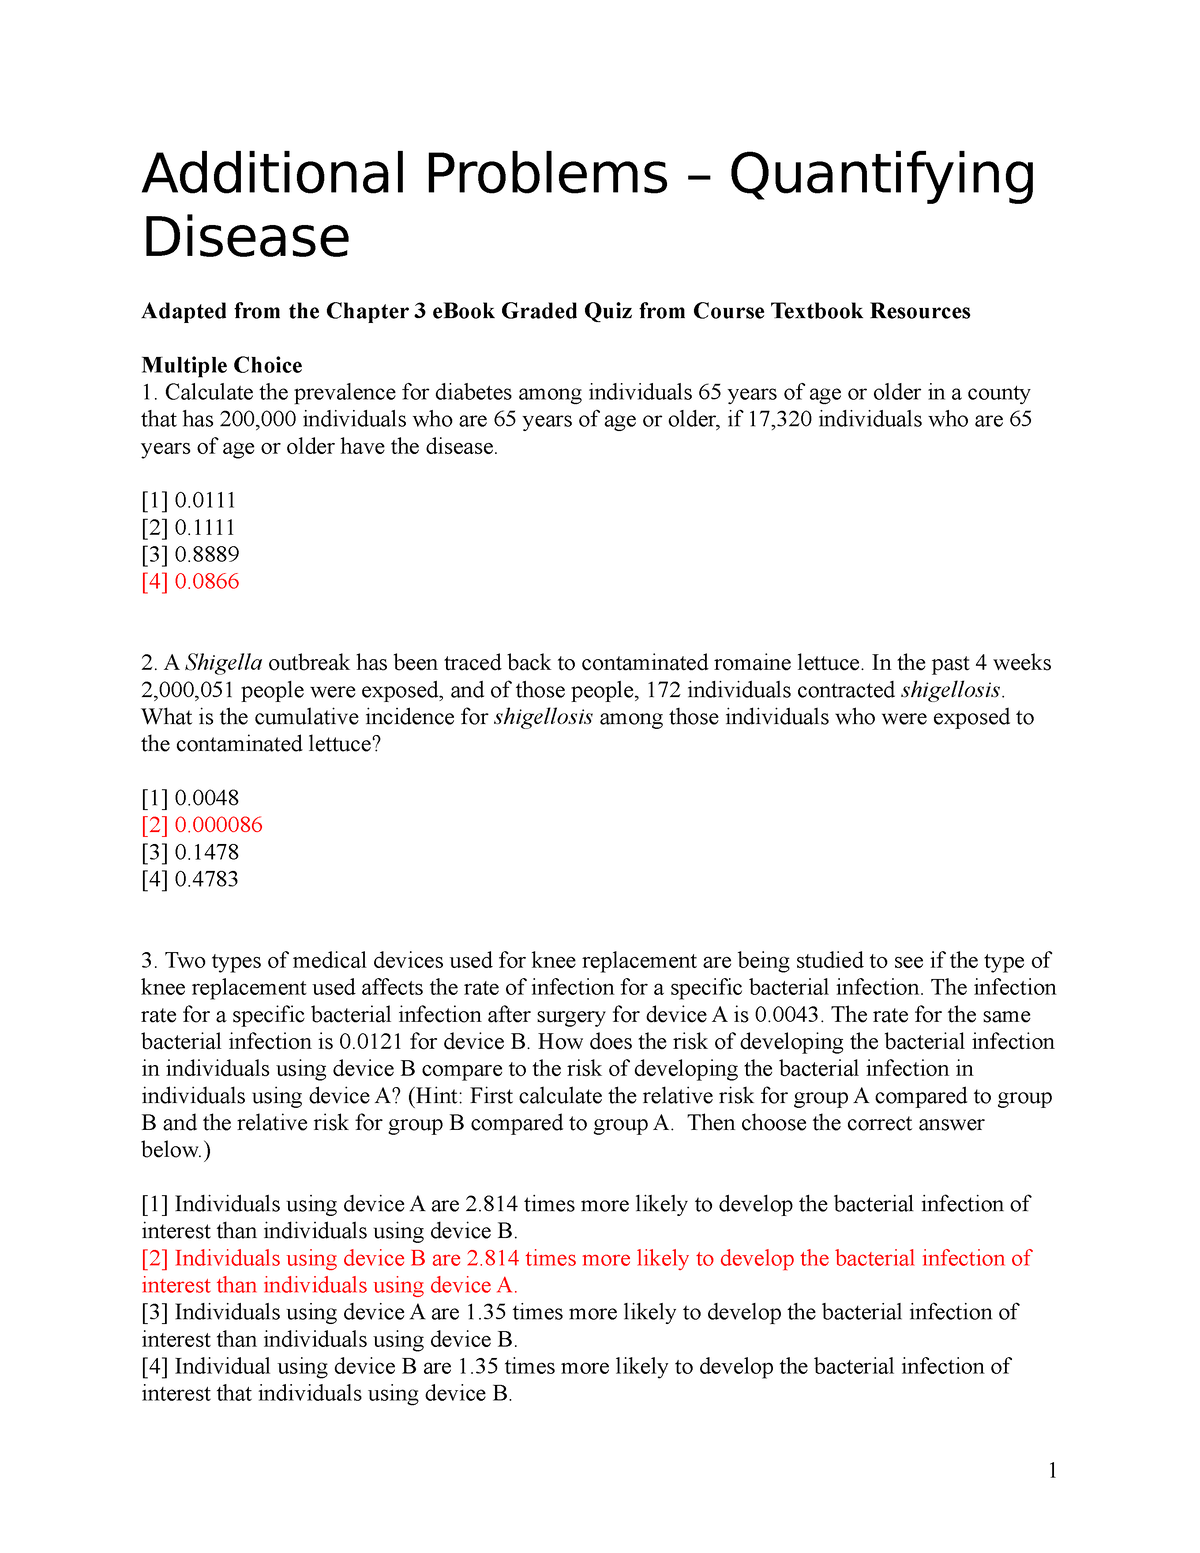 optional-practice-problems-quantifying-disease-key-additional-problems-quantifying-disease